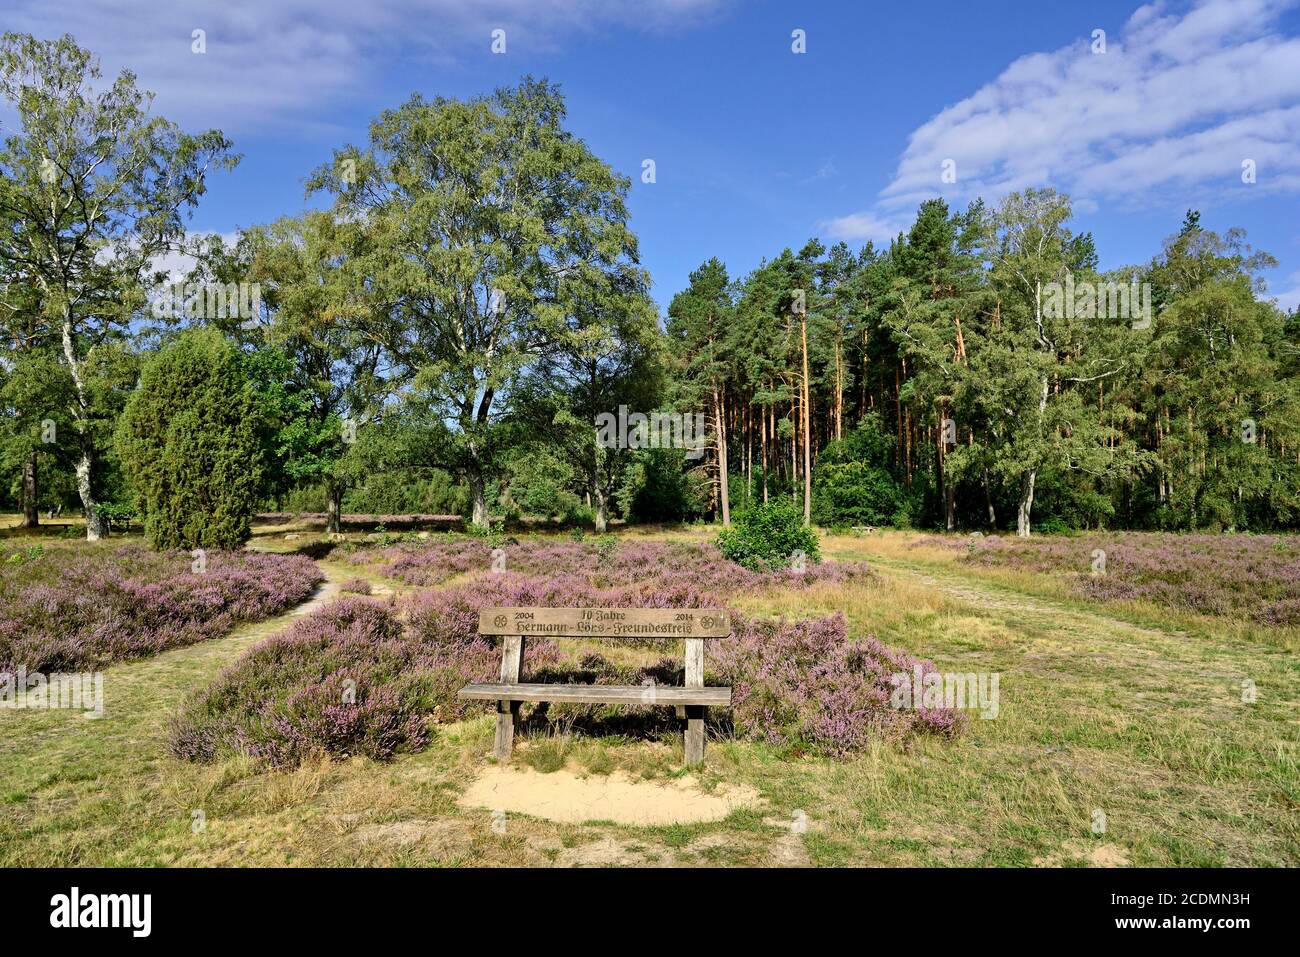 Heidelandschaft, Wietzer Berg with a viewing bench, Common Heather (Calluna Vulgaris), junipers (Juniperus communis), Birches (Betula) and Pines Stock Photo